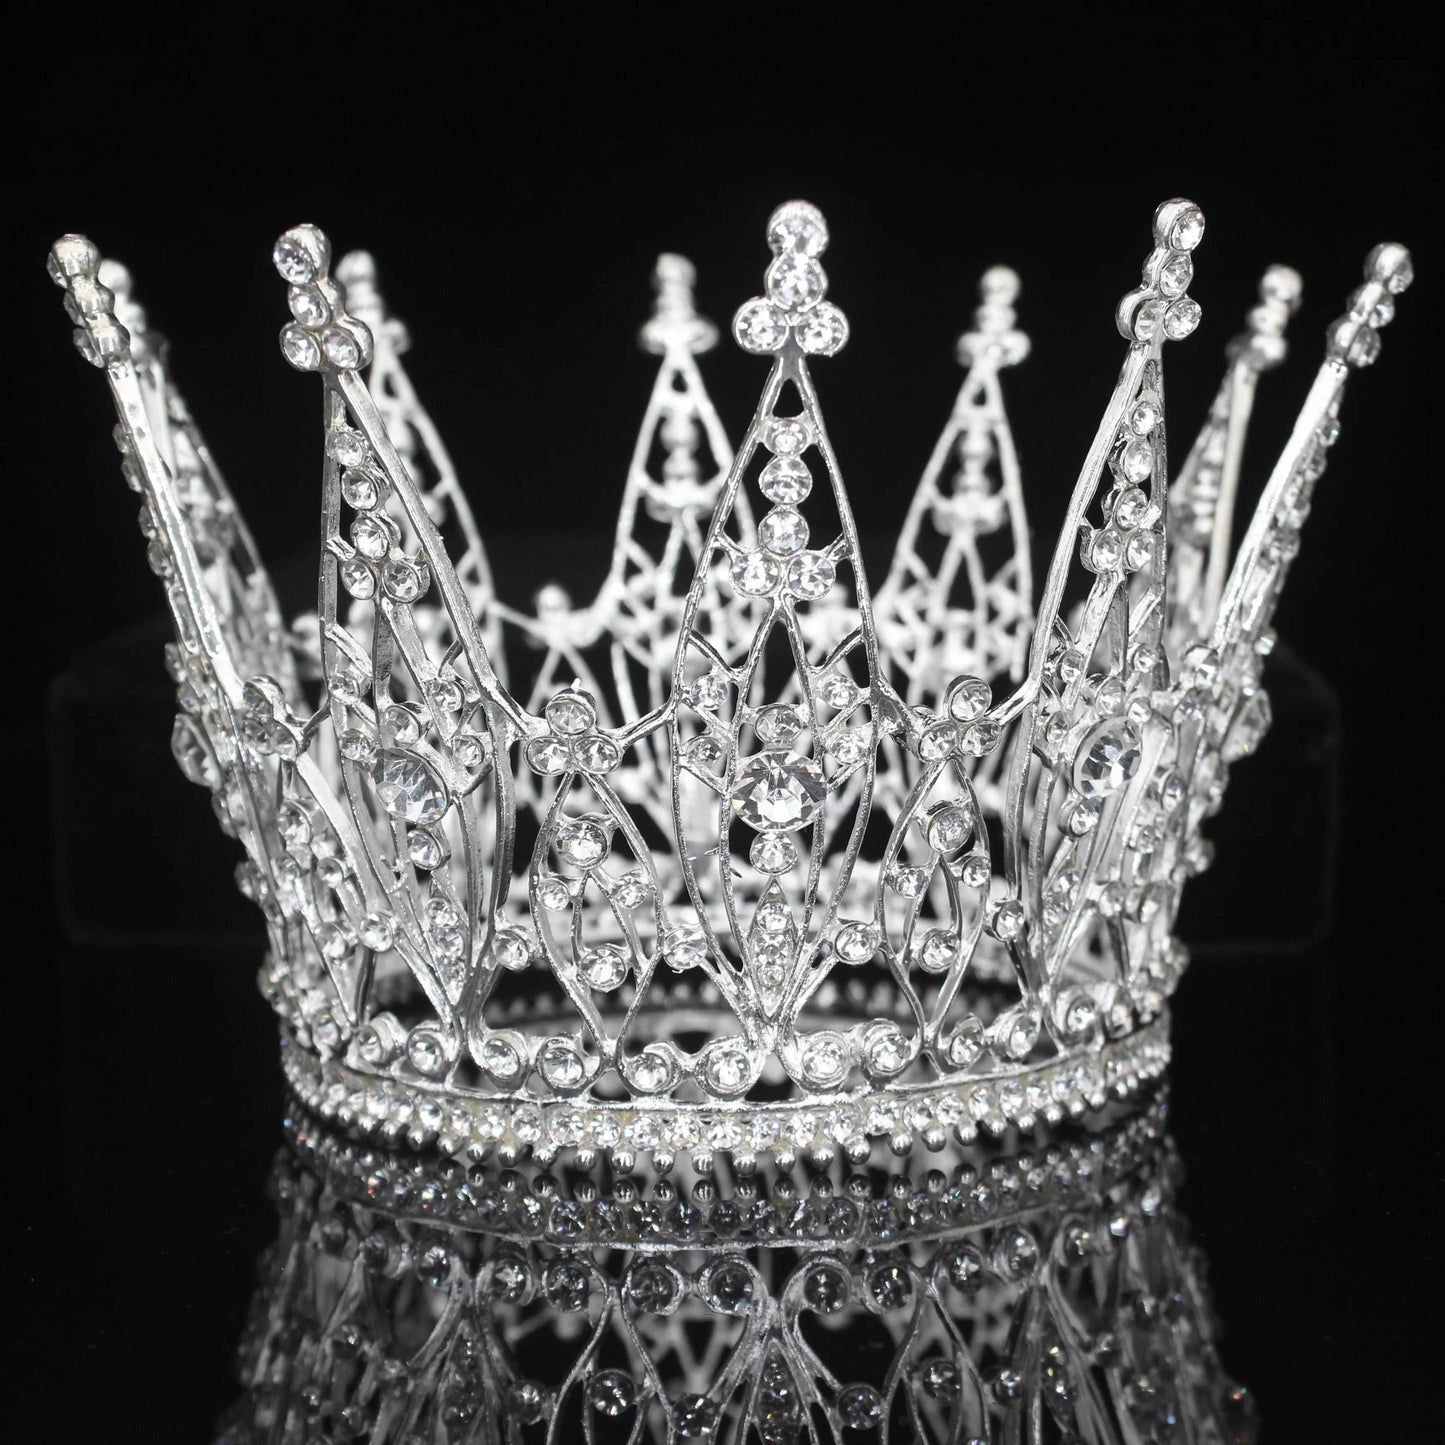 The Benedikte Crown